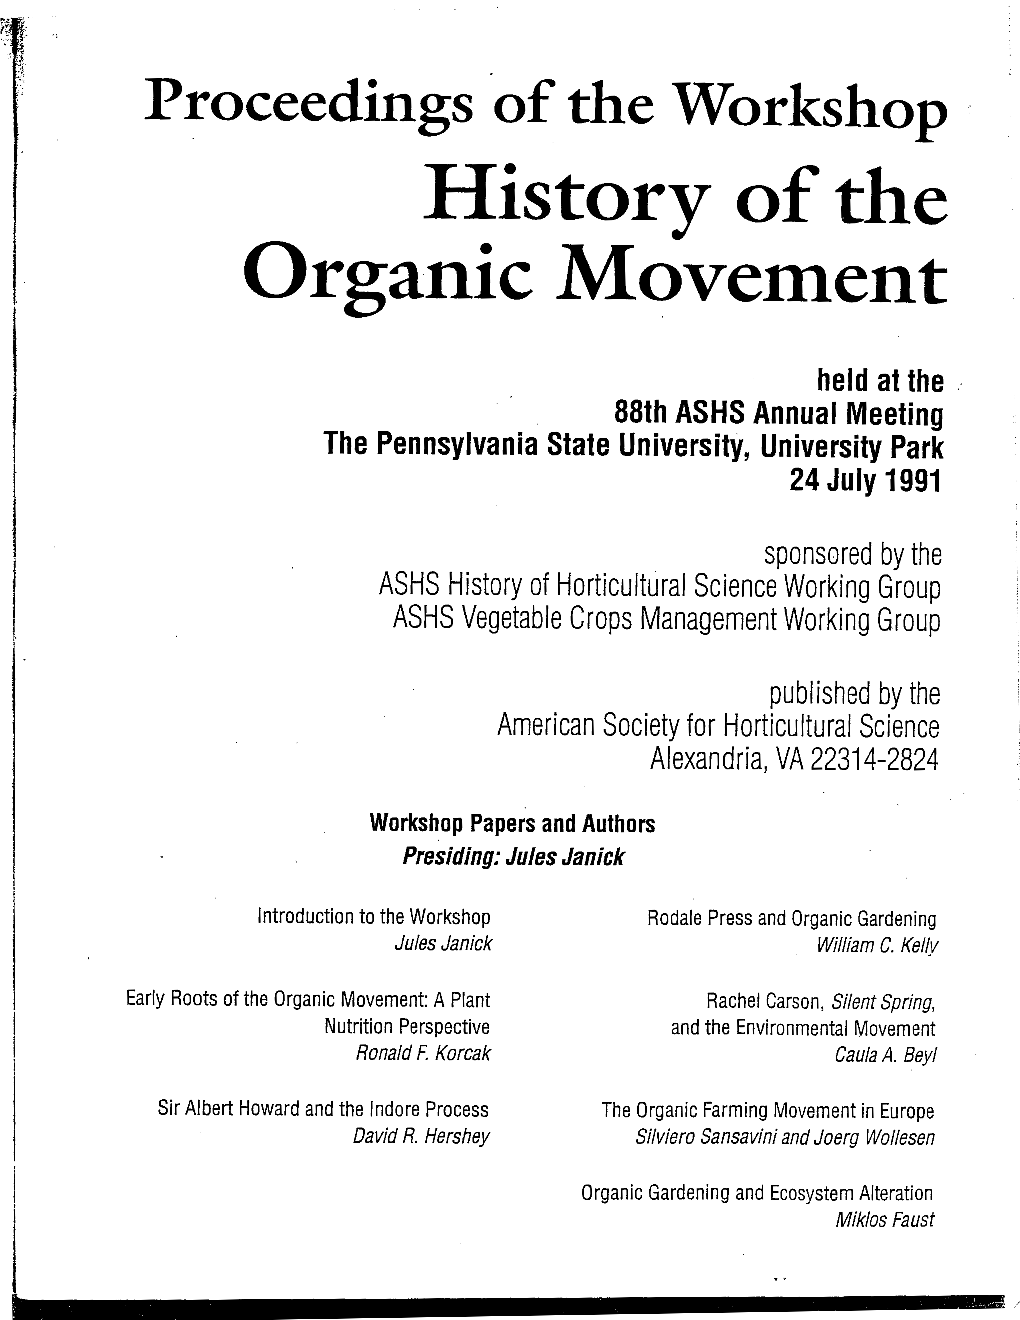 History of the Organic Movement